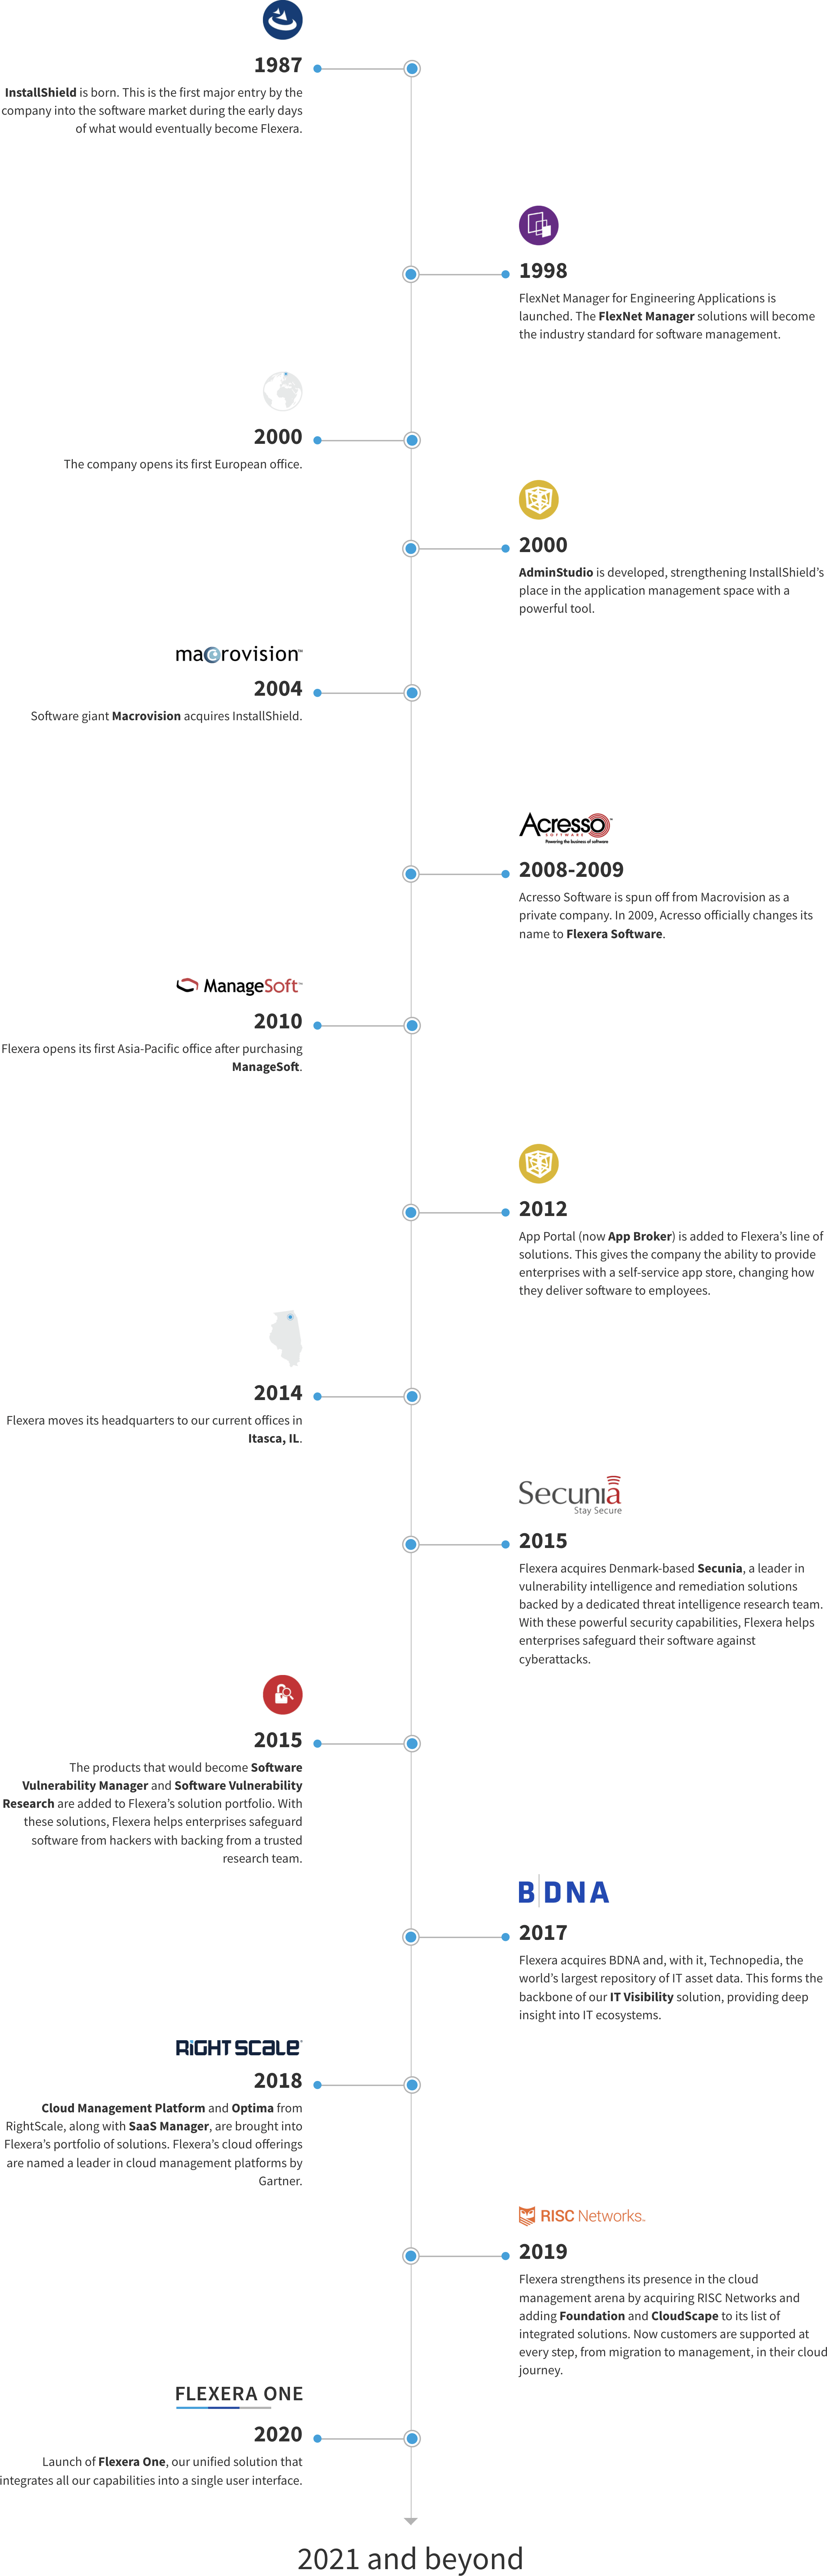 Flexera history timeline